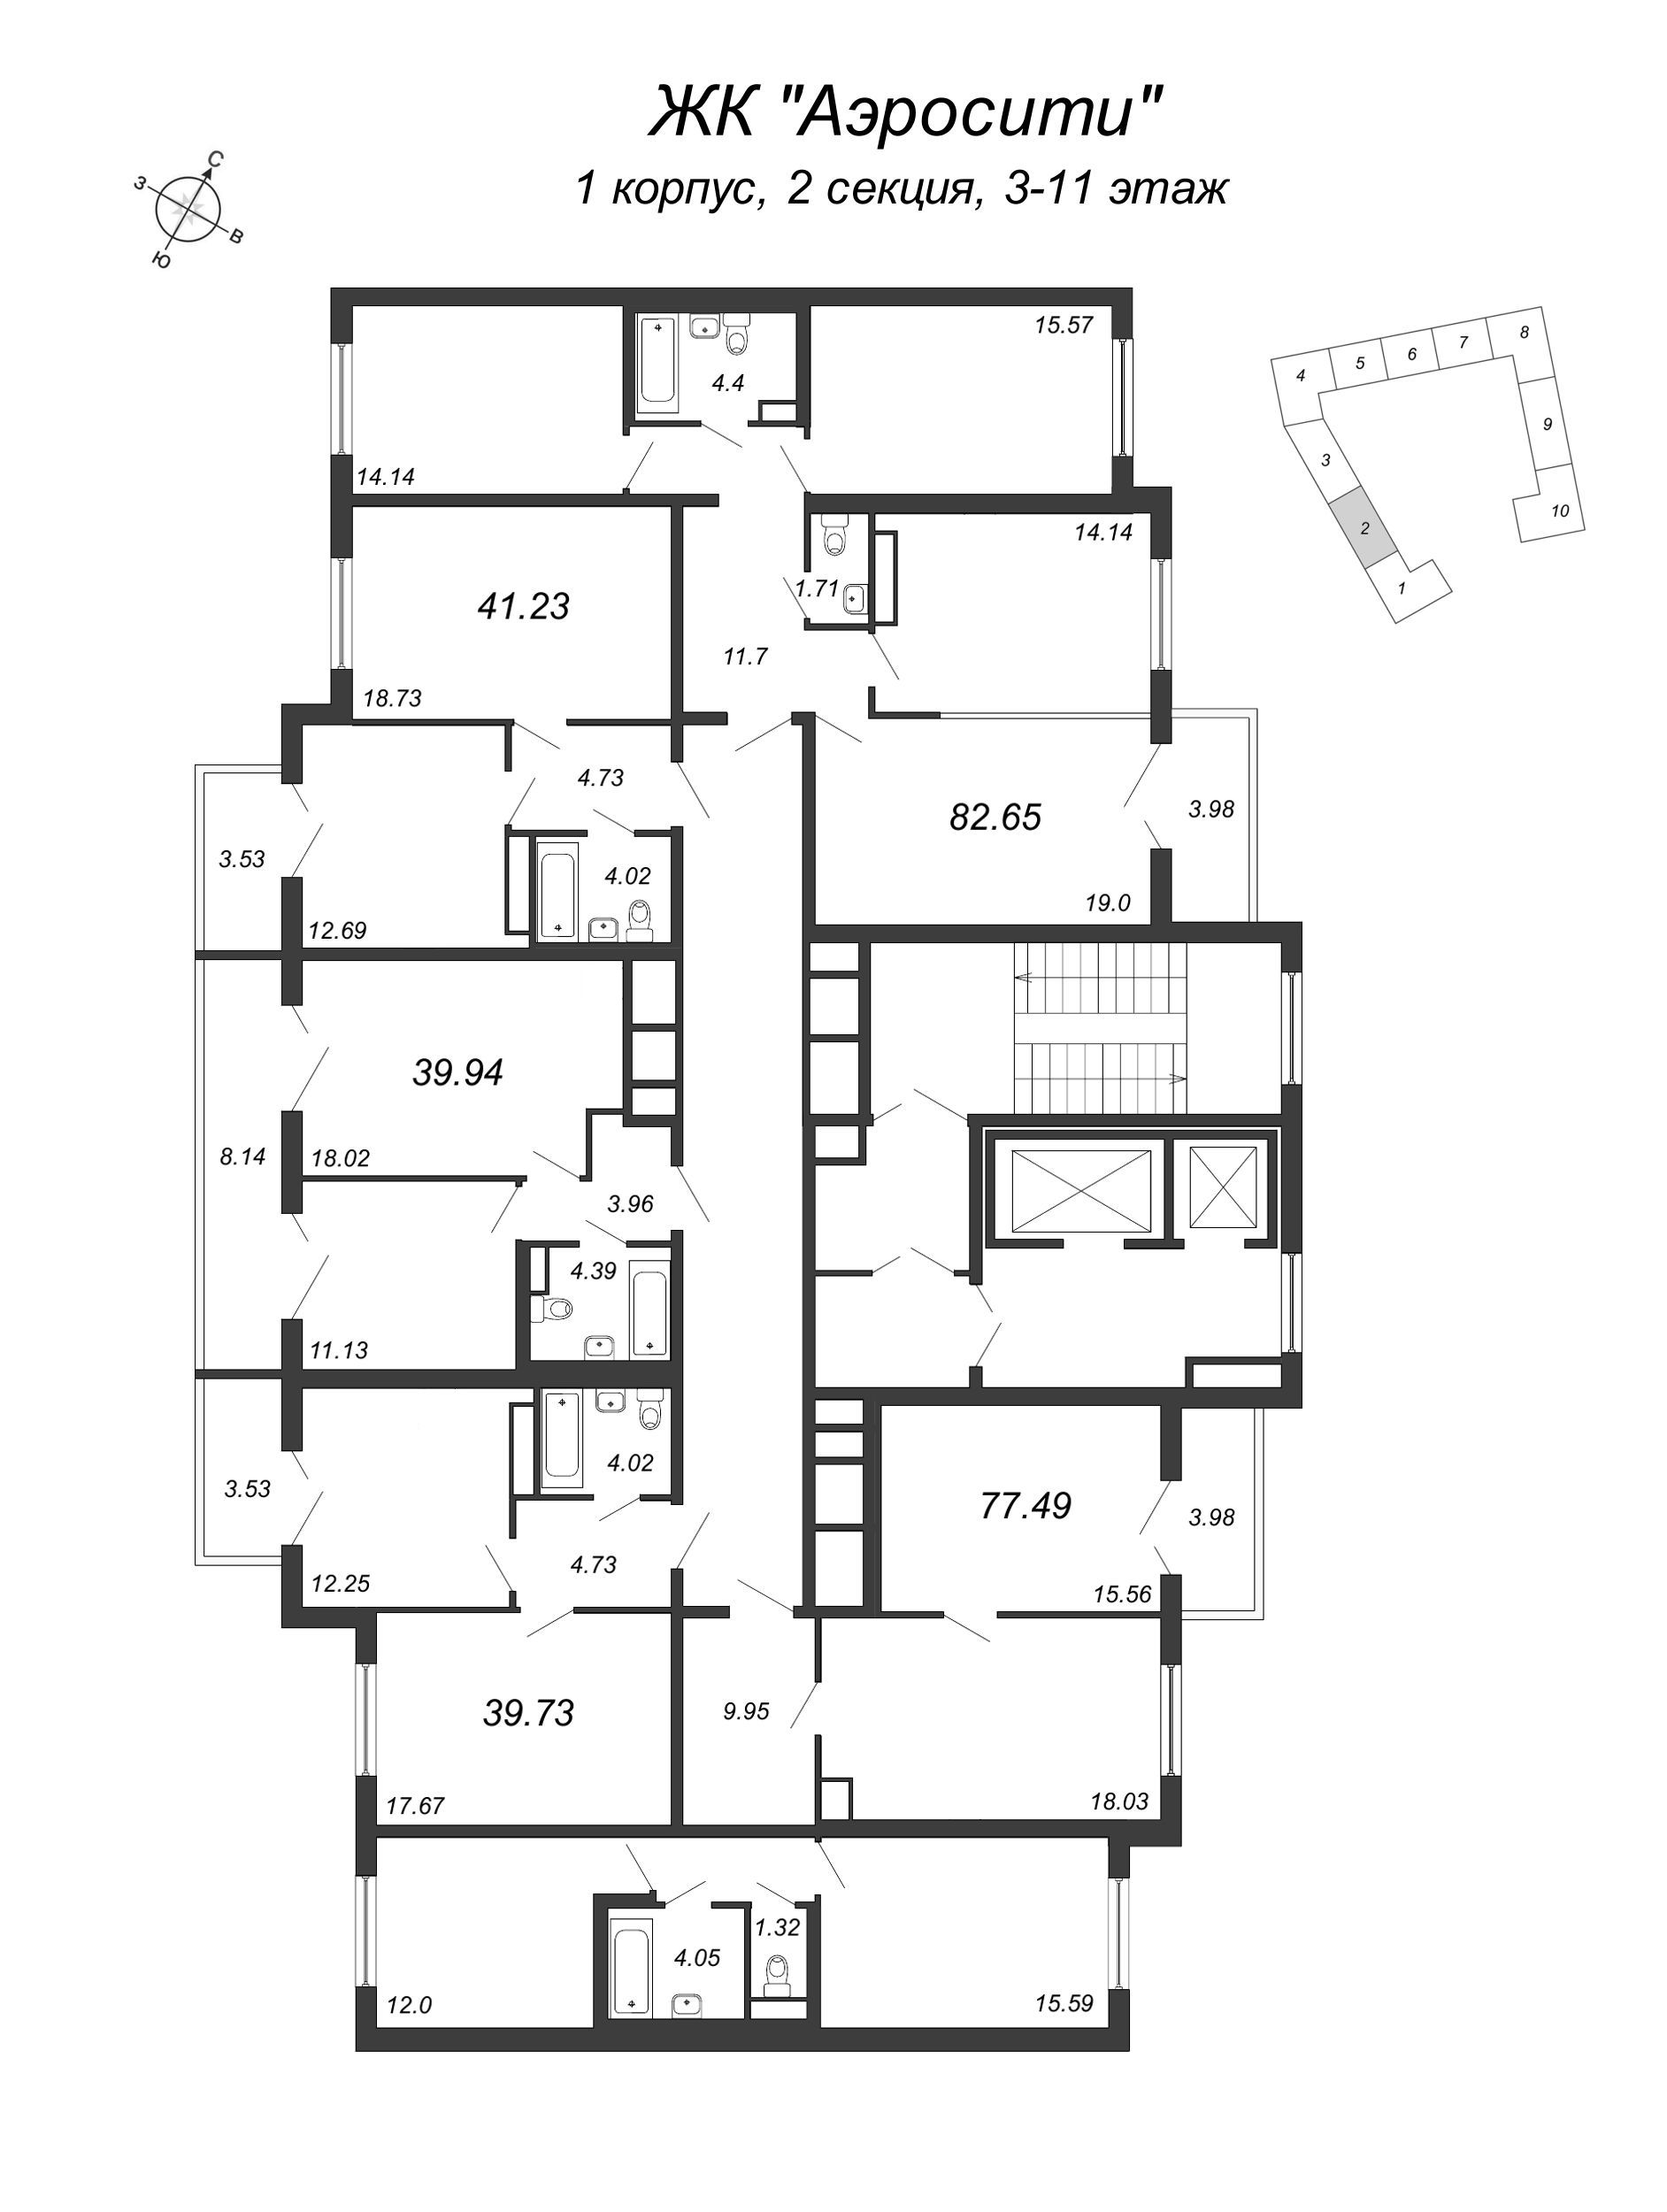 4-комнатная (Евро) квартира, 77 м² - планировка этажа